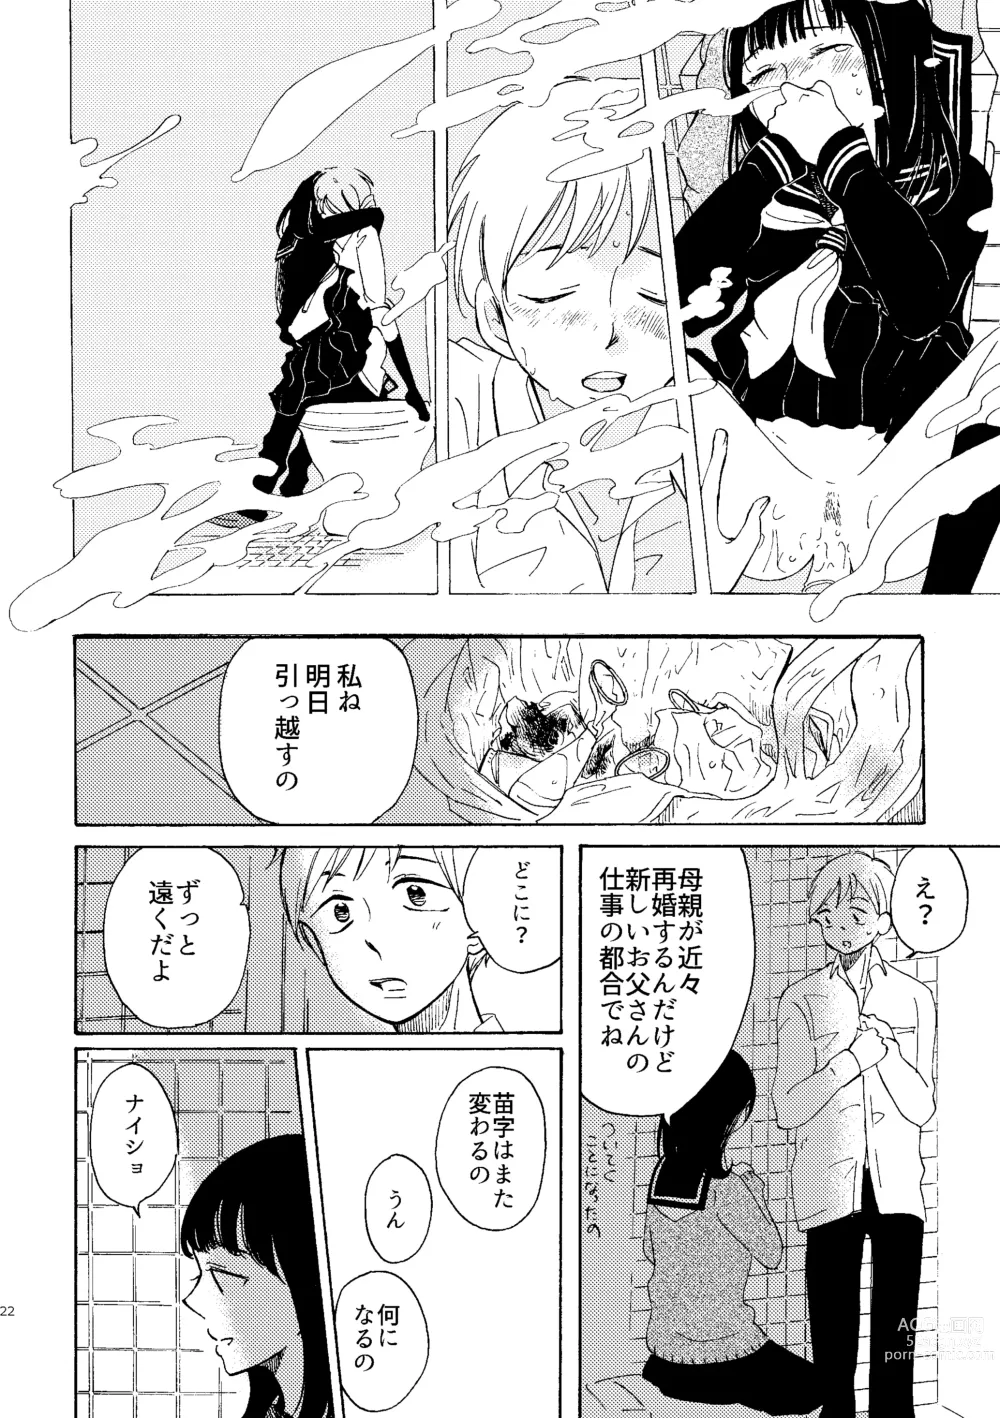 Page 22 of doujinshi Ibitsu na Junjou